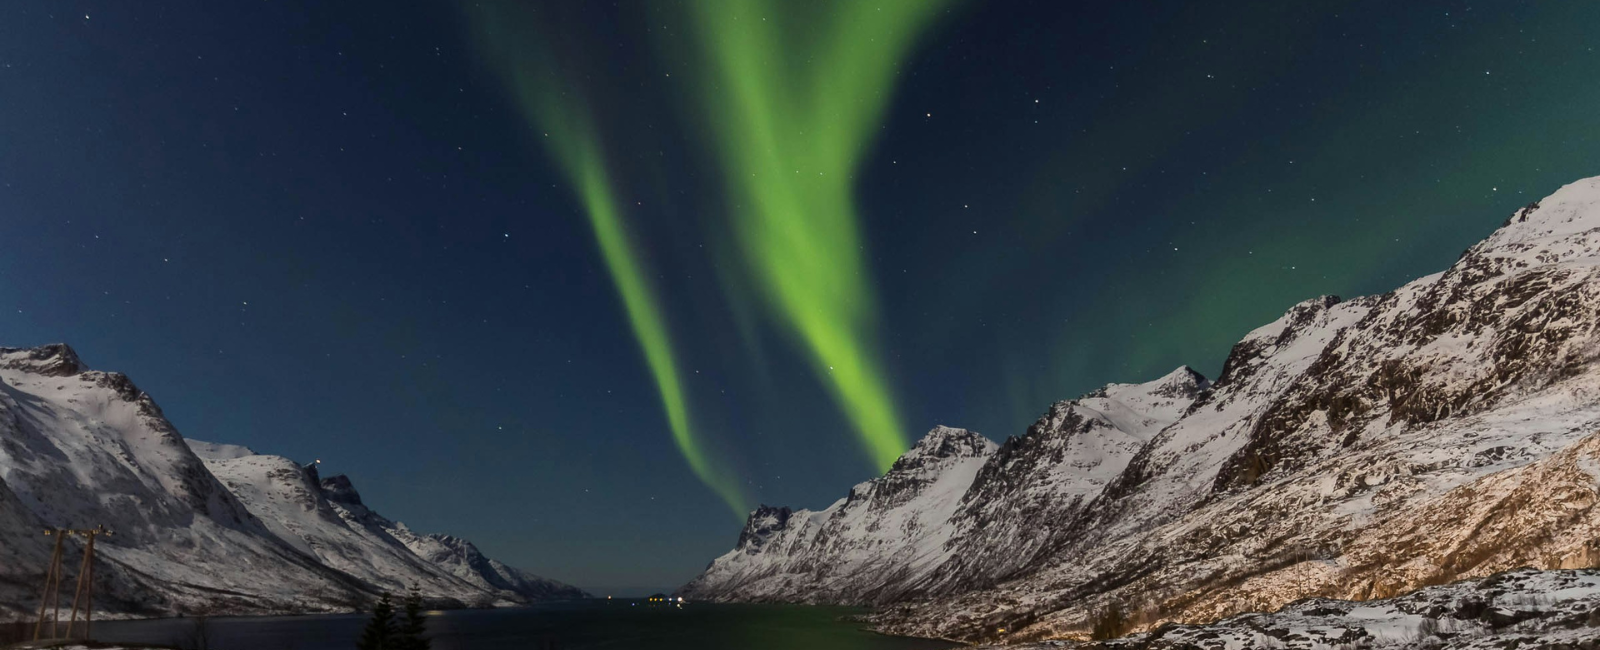 Tromso, Norway northern aurora borealis (northern lights)